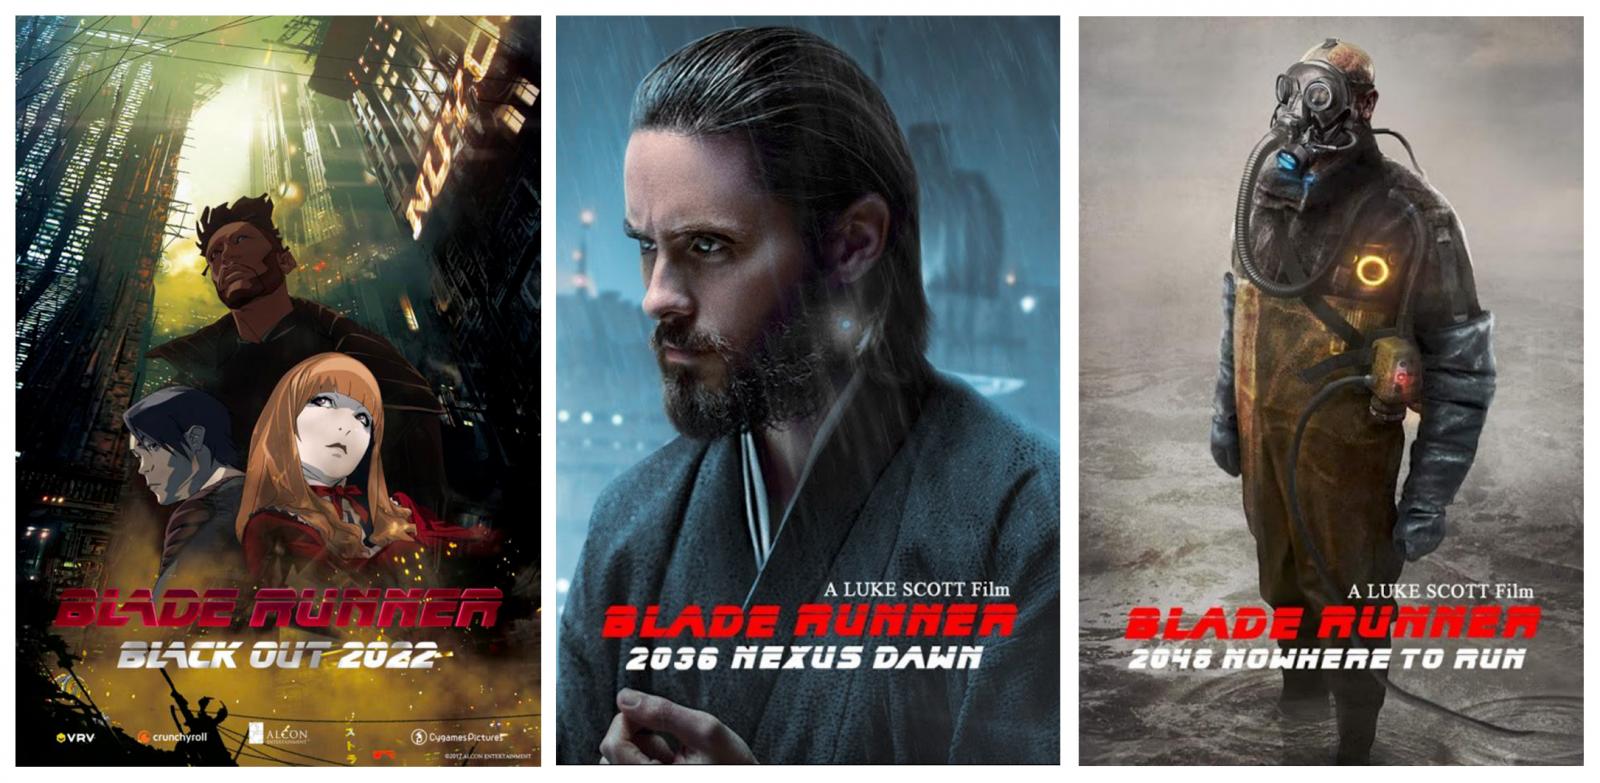 Blade Runner Prequel films